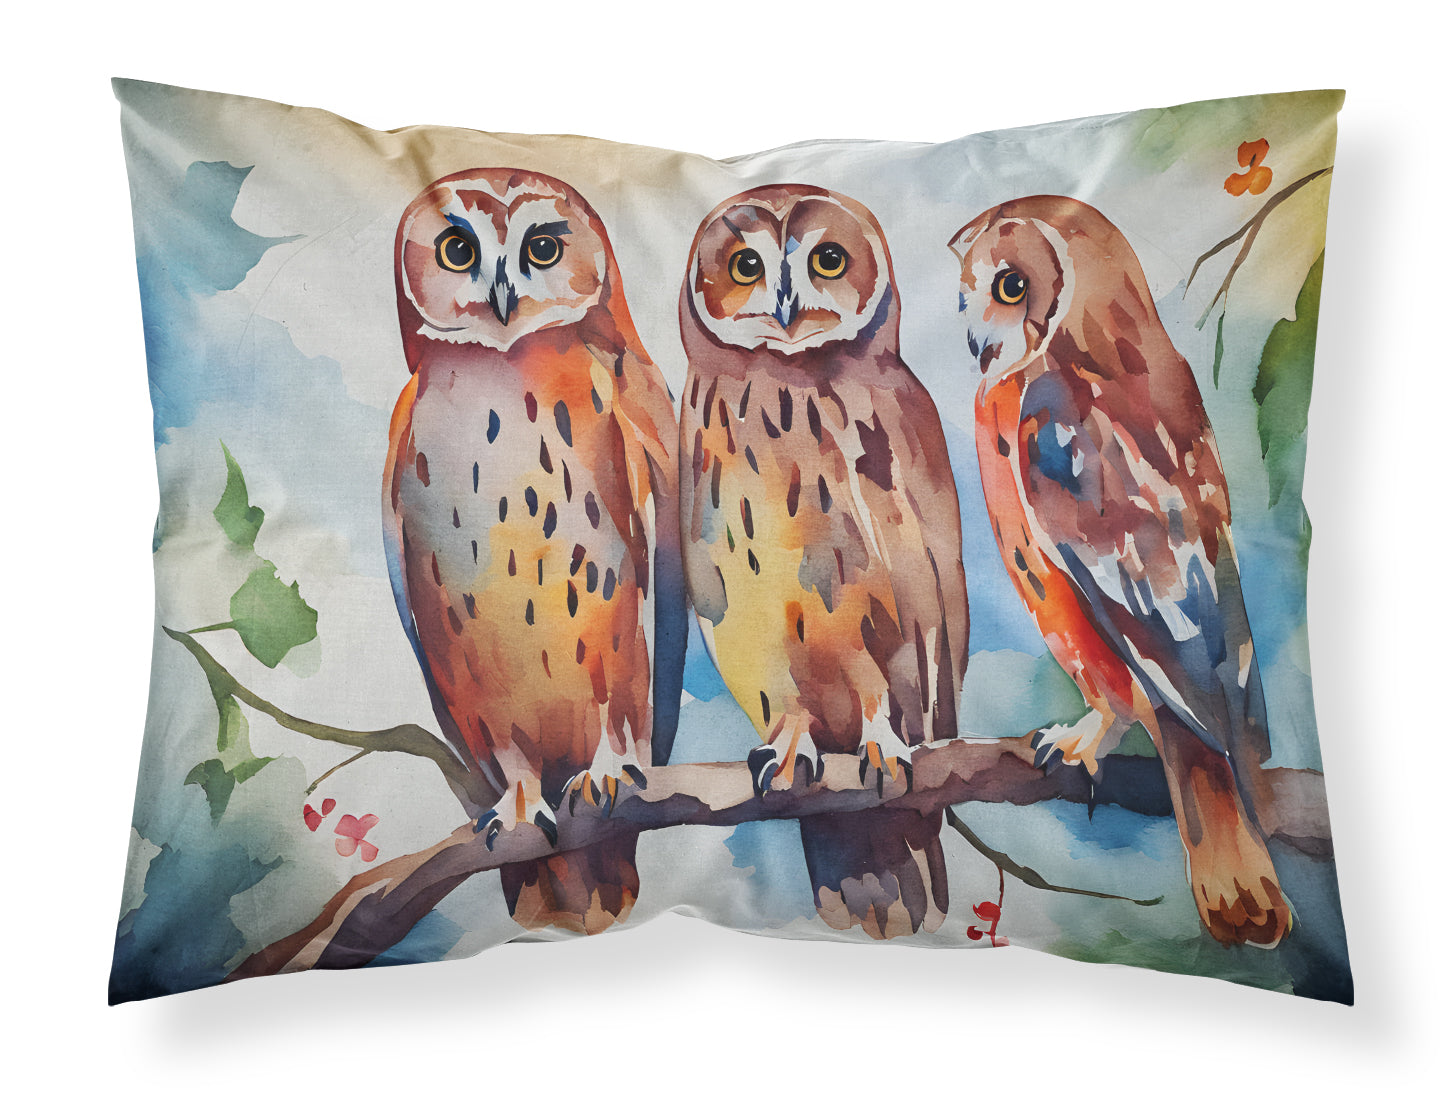 Buy this Owls Standard Pillowcase